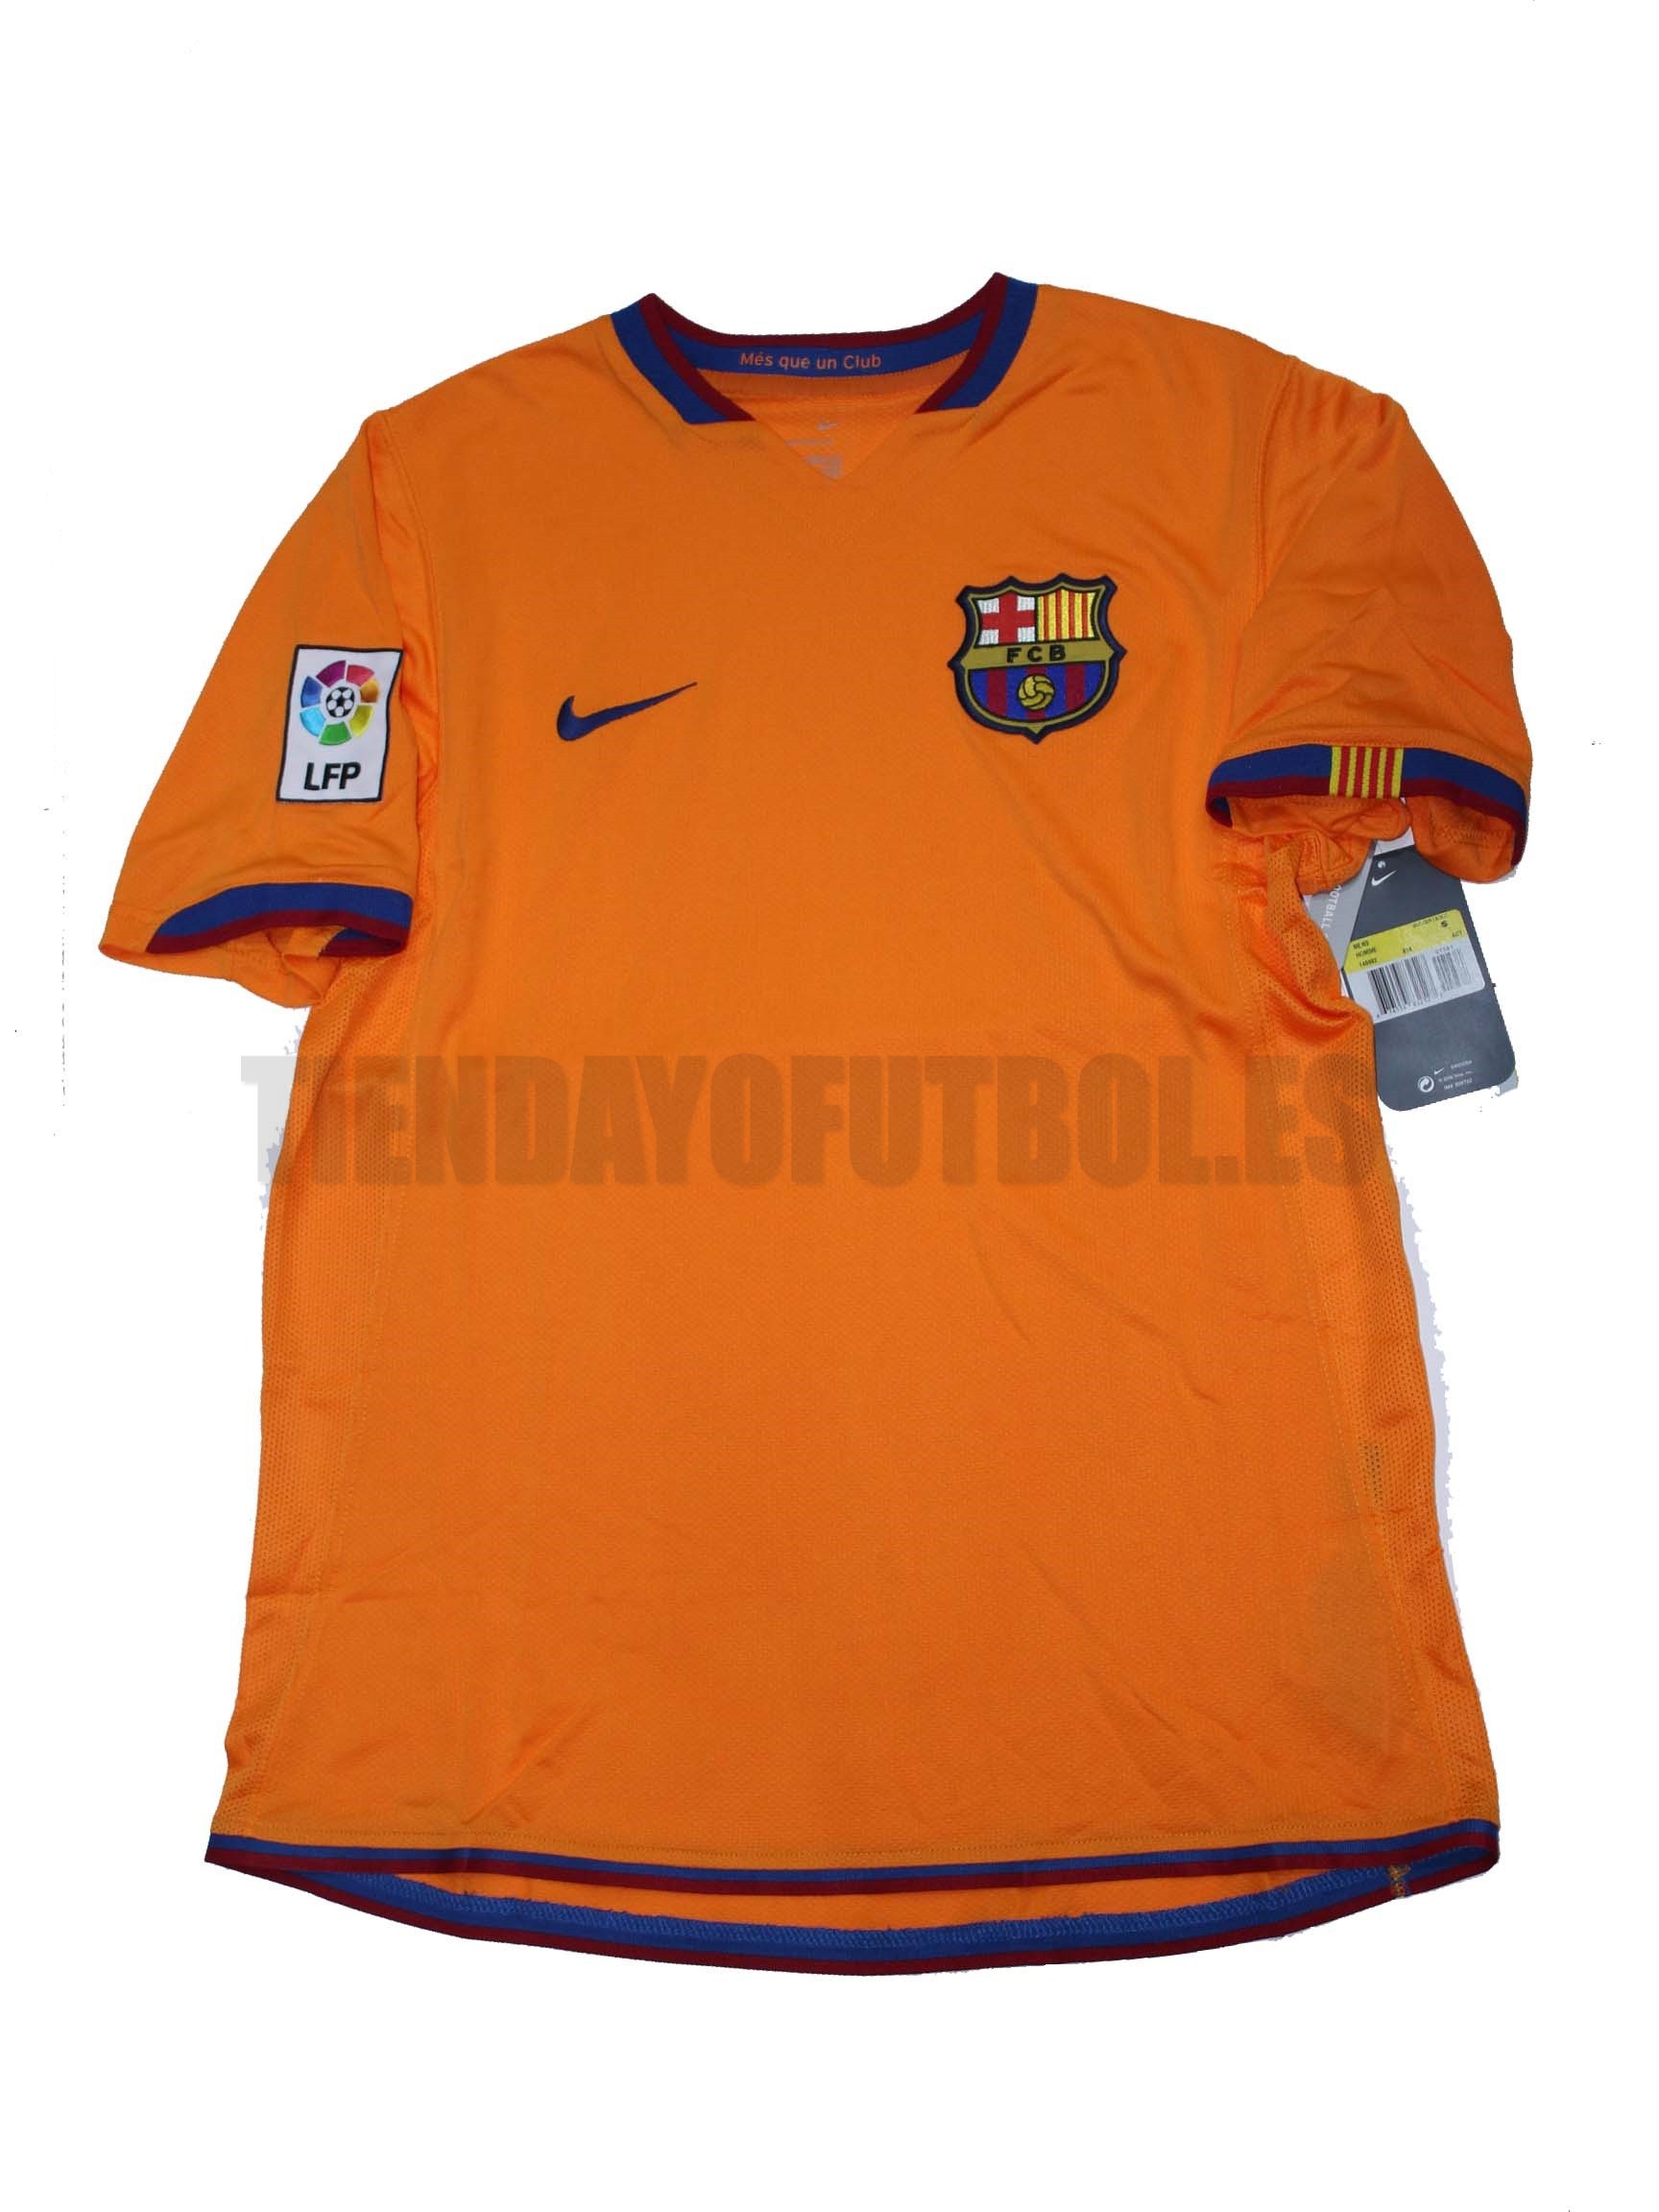 https://tiendayofutbol.es/640/camiseta-2-201516-fc-barcelona-nike.jpg